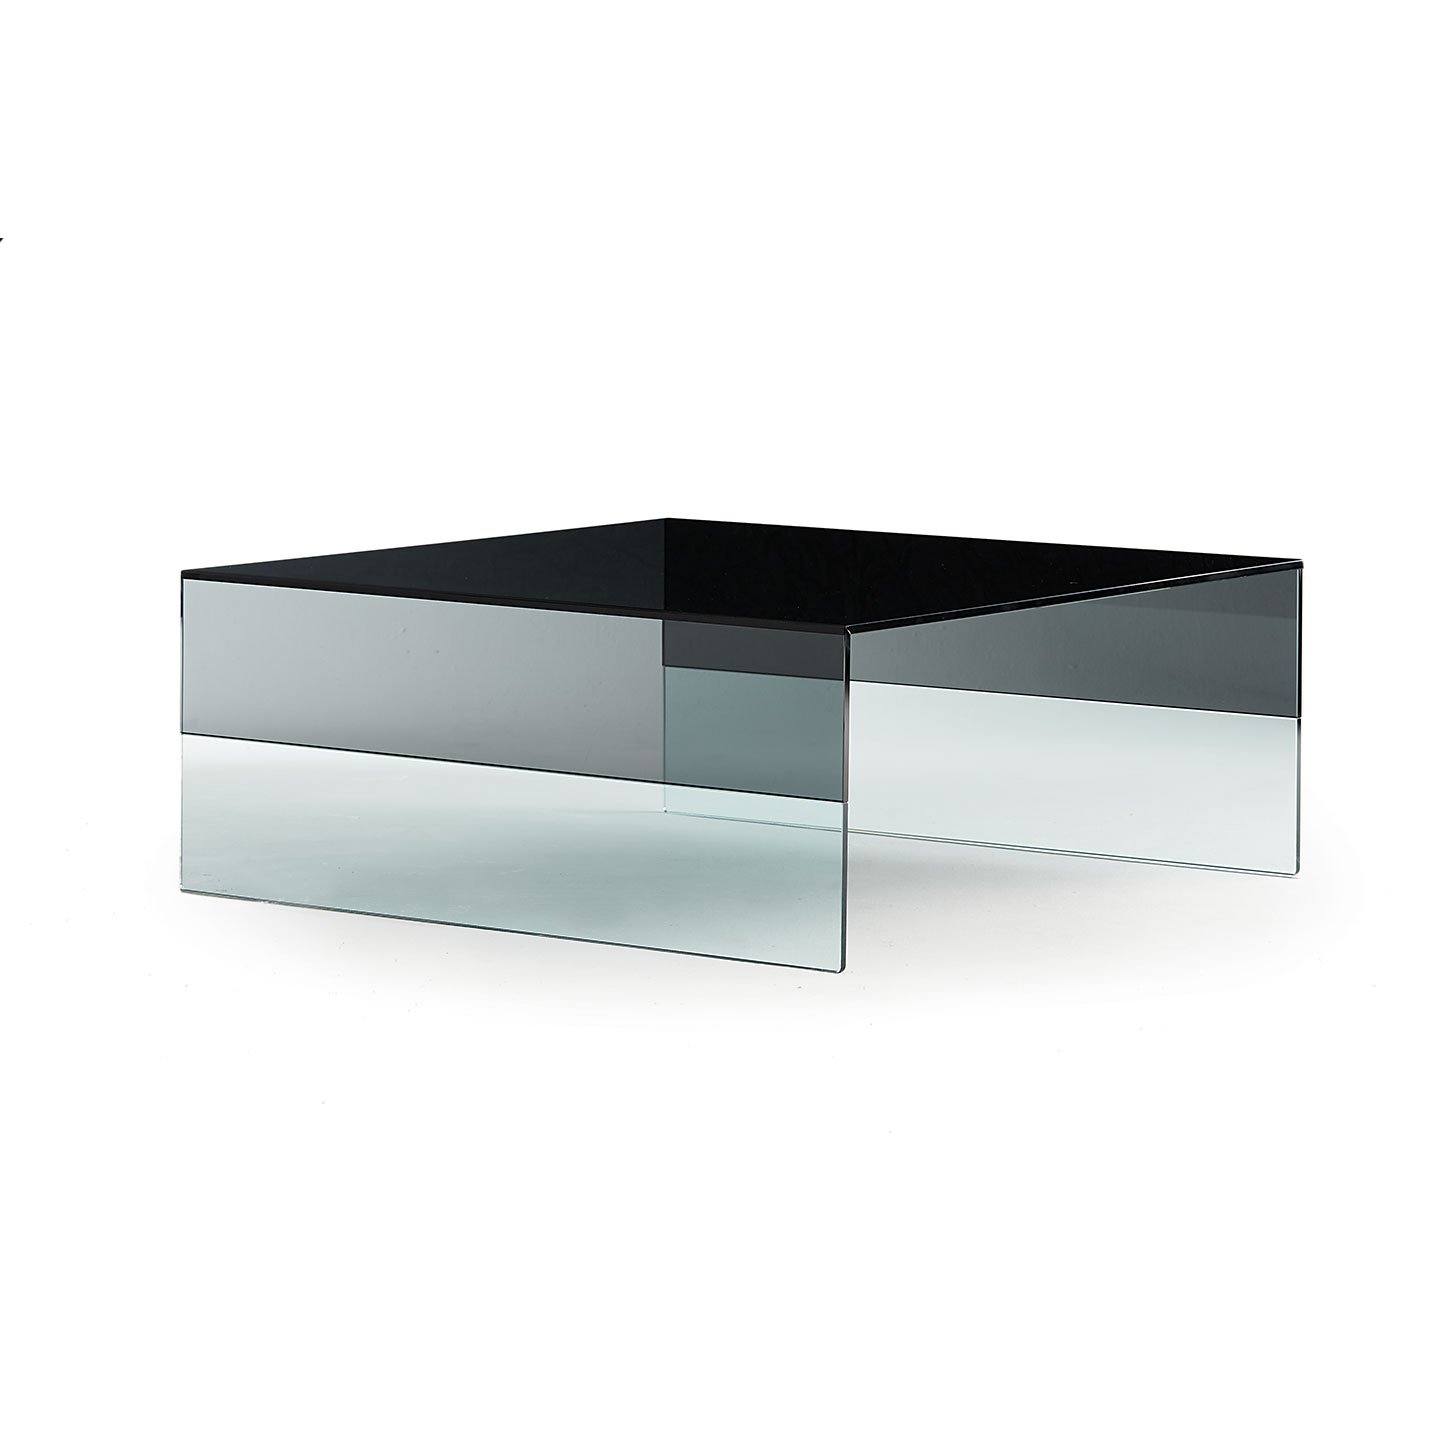 Haworth Smoke Table with rectangle shape and smoked glass